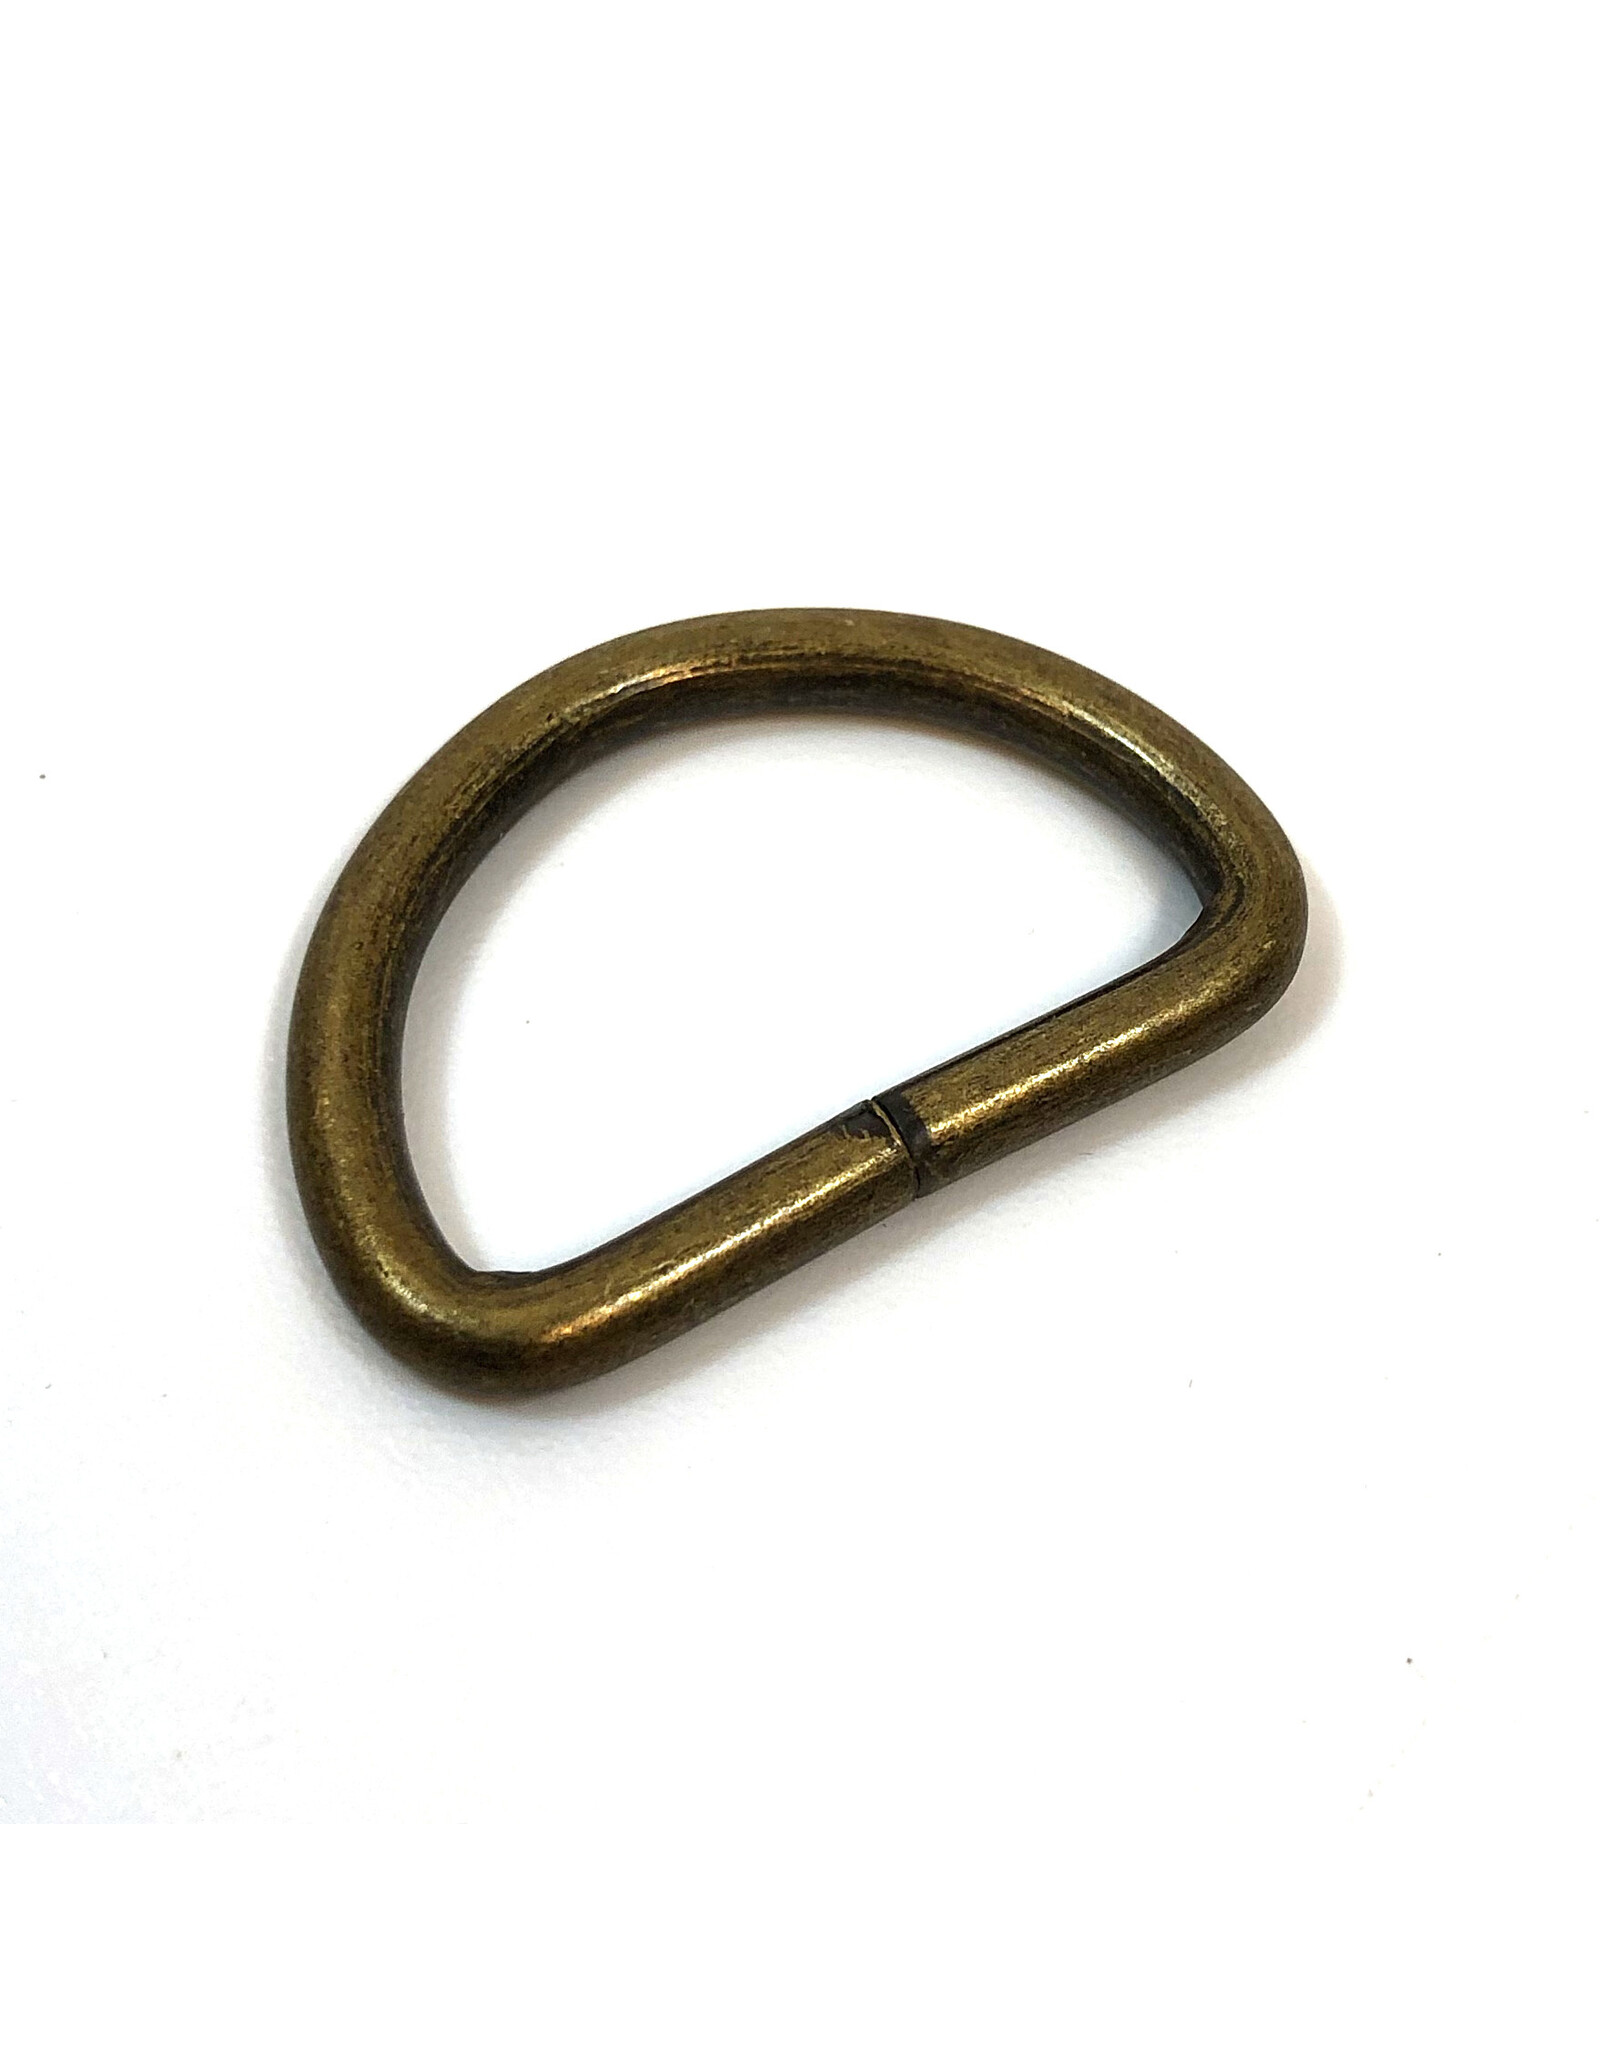 D-ring 25mm